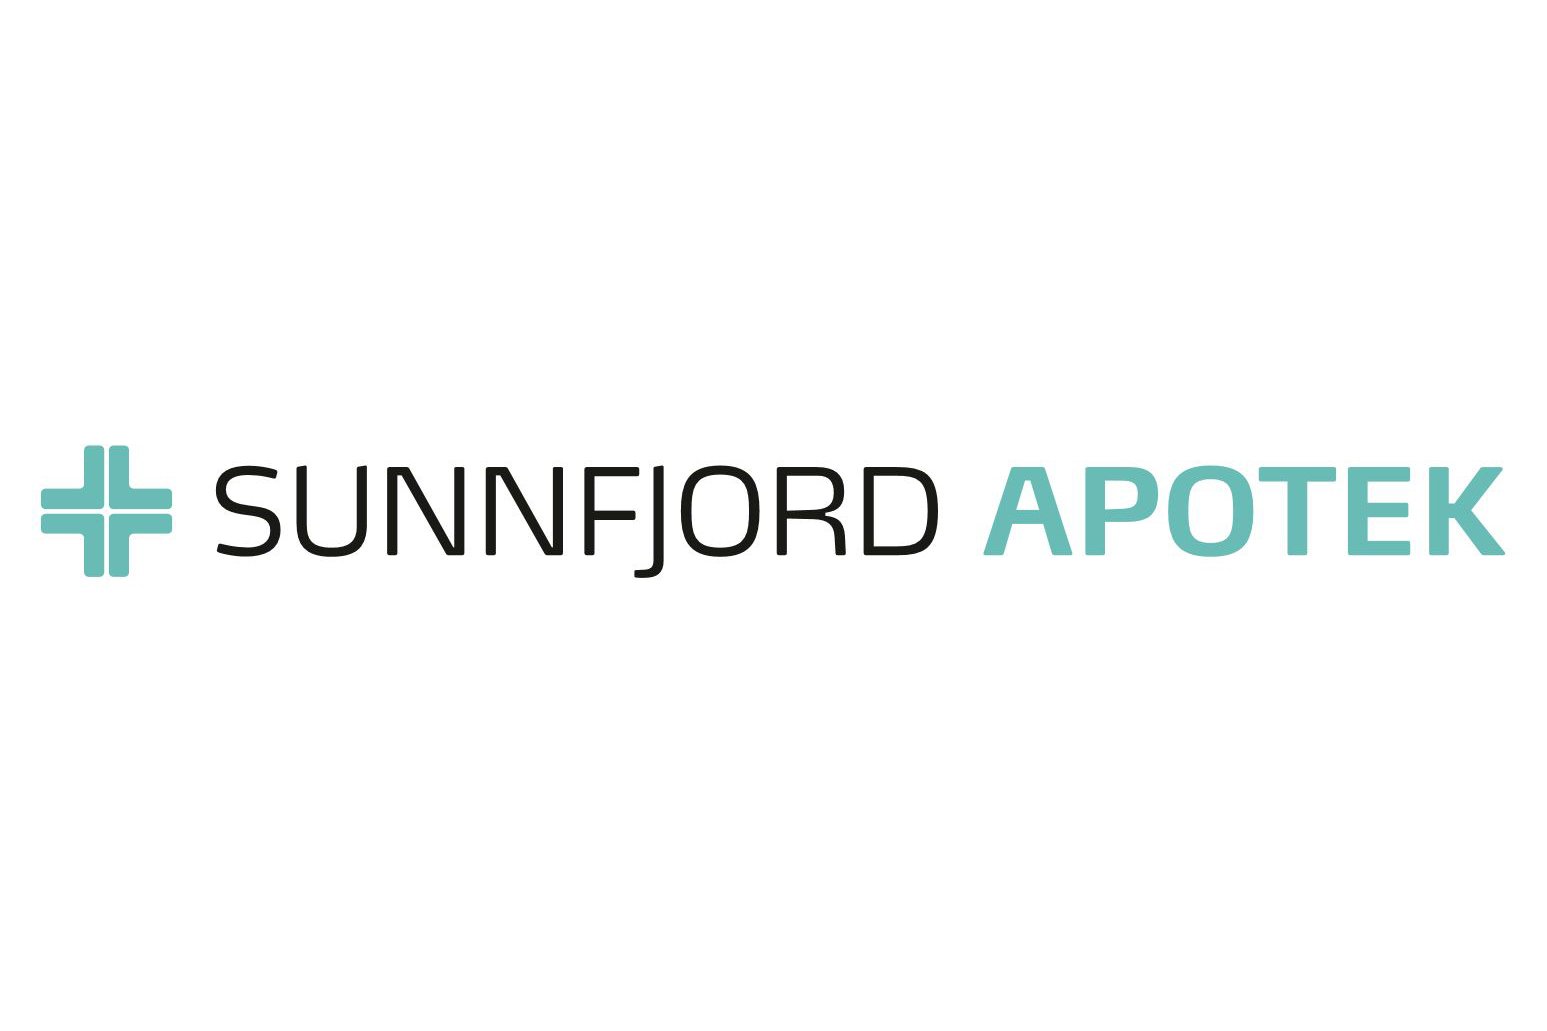 Sunnfjord Apotek logo.jpg